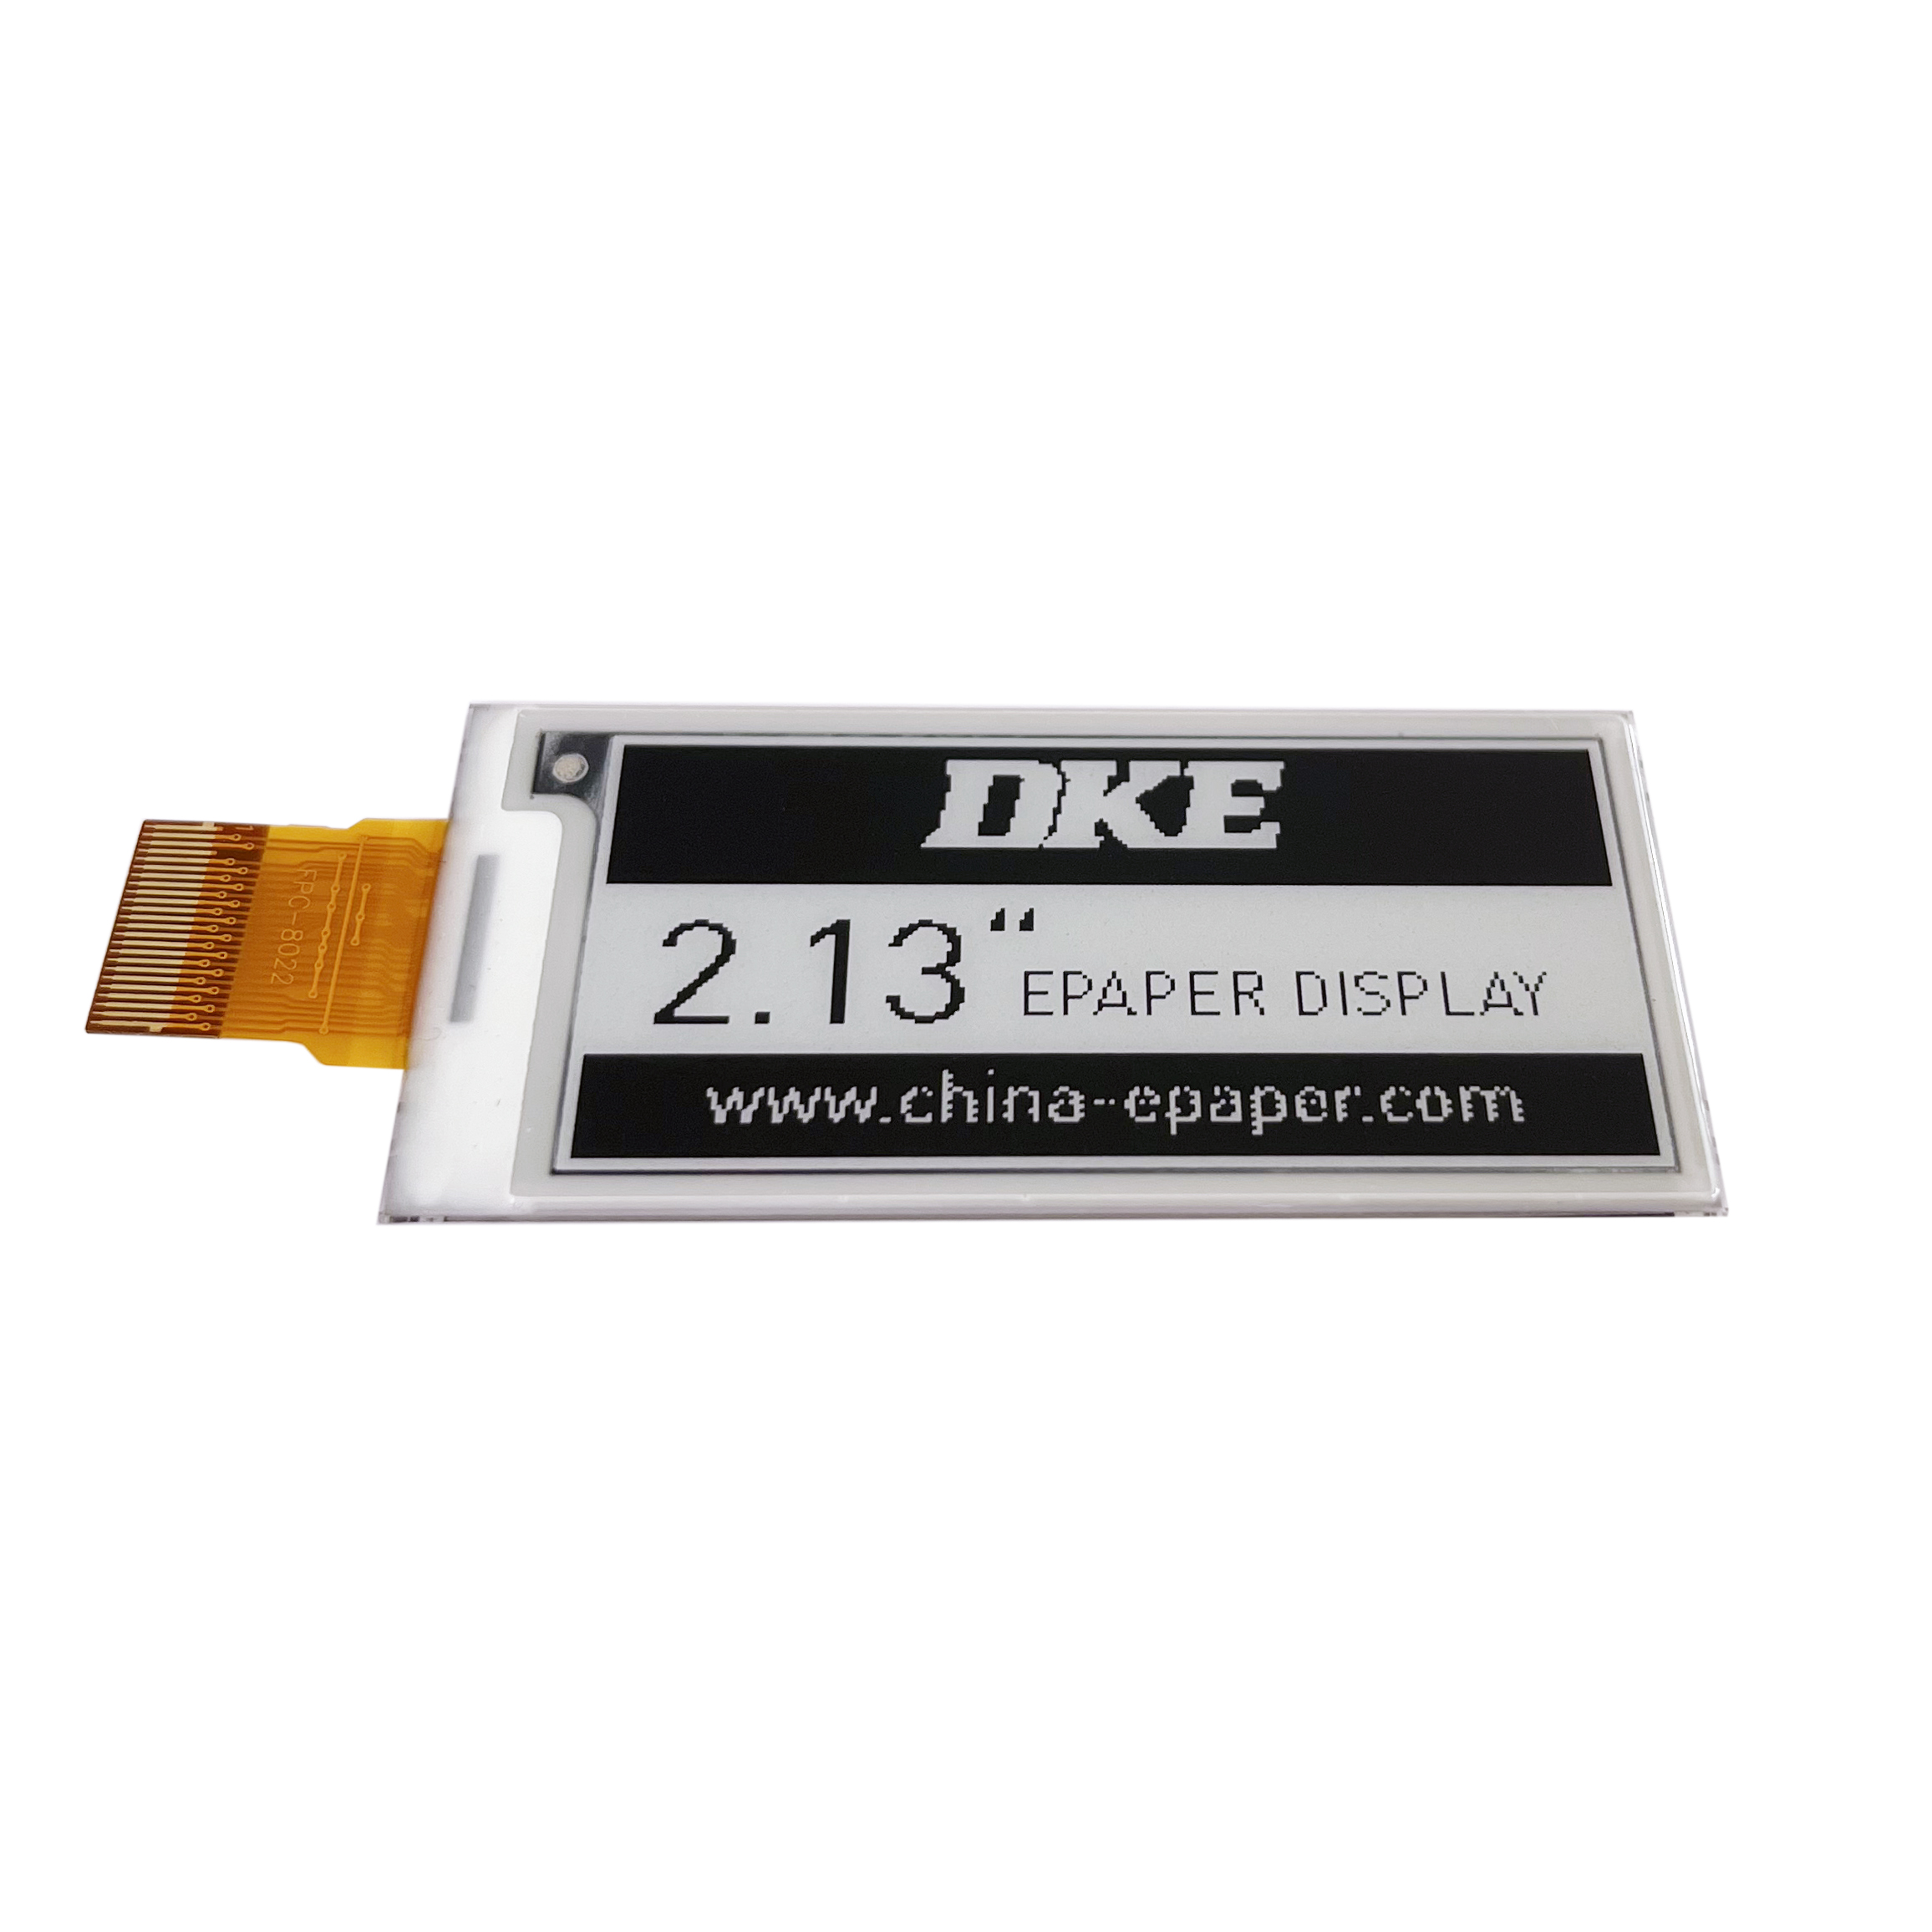 DKE 2.13 Inch Epaper Display